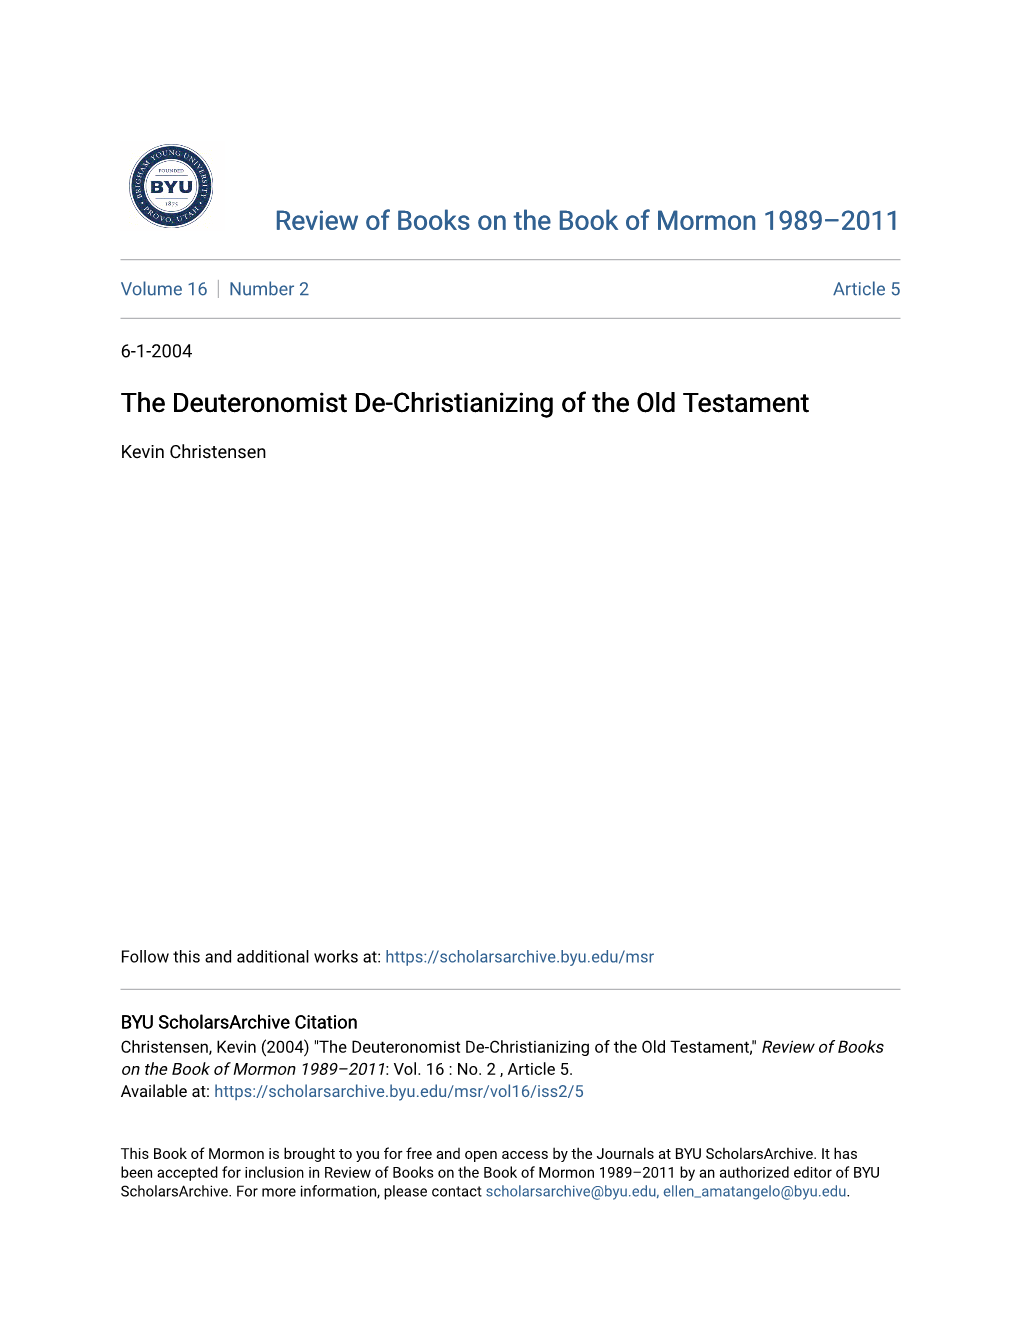 The Deuteronomist De-Christianizing of the Old Testament